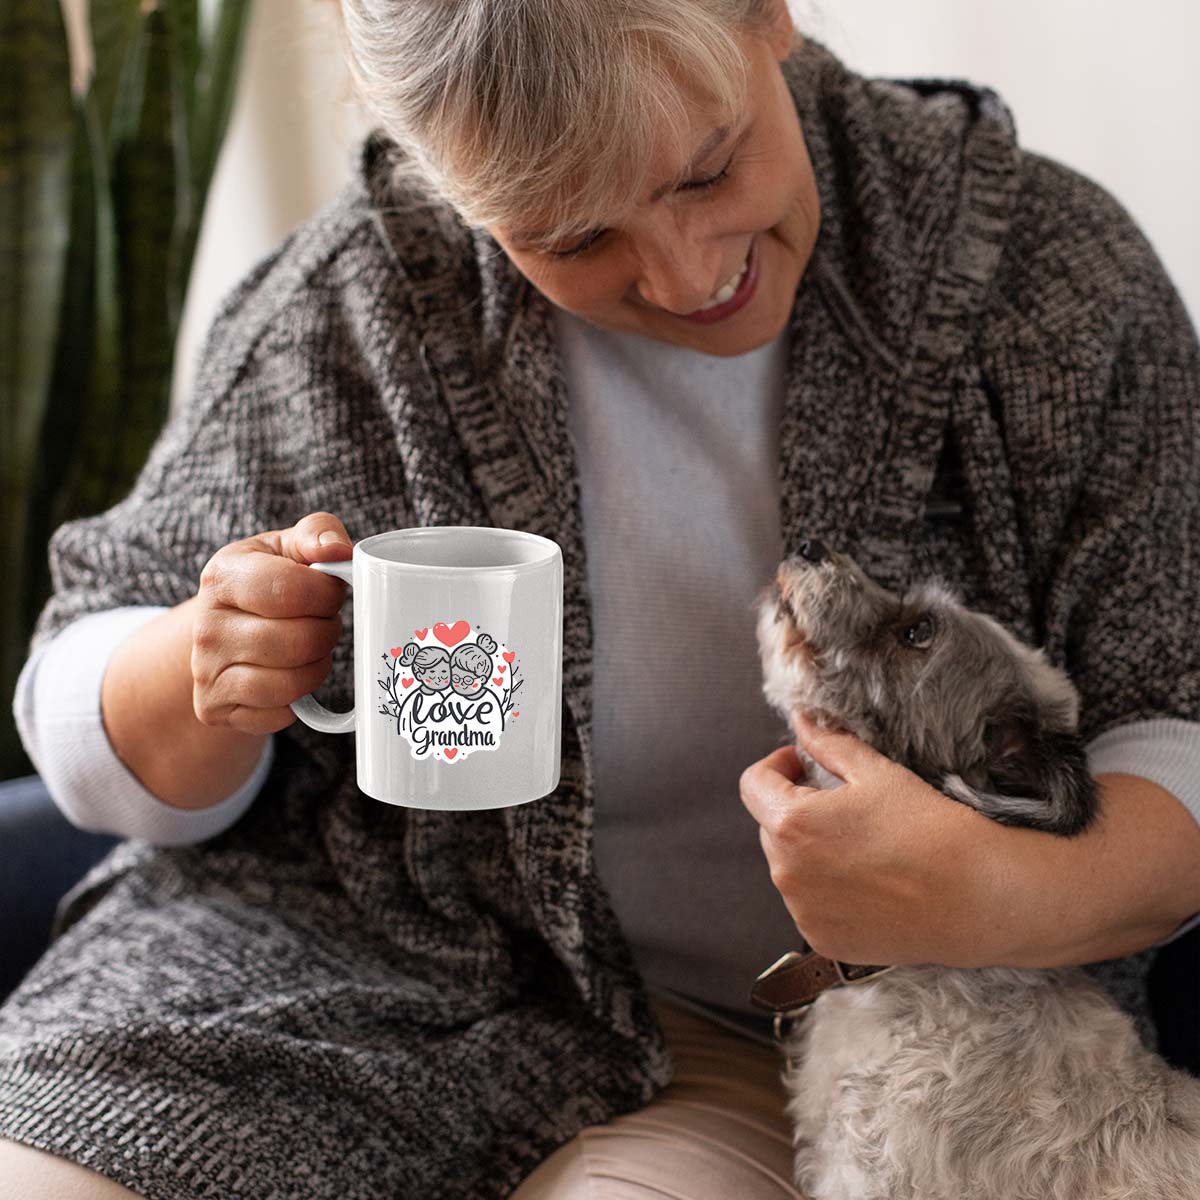 Grandma Mug, Grandma Gift For Grandma Birthday Gift Personalized Grandma Coffee Cup, Mothers Day Gift From Granddaughter Grandson, Grandma 7